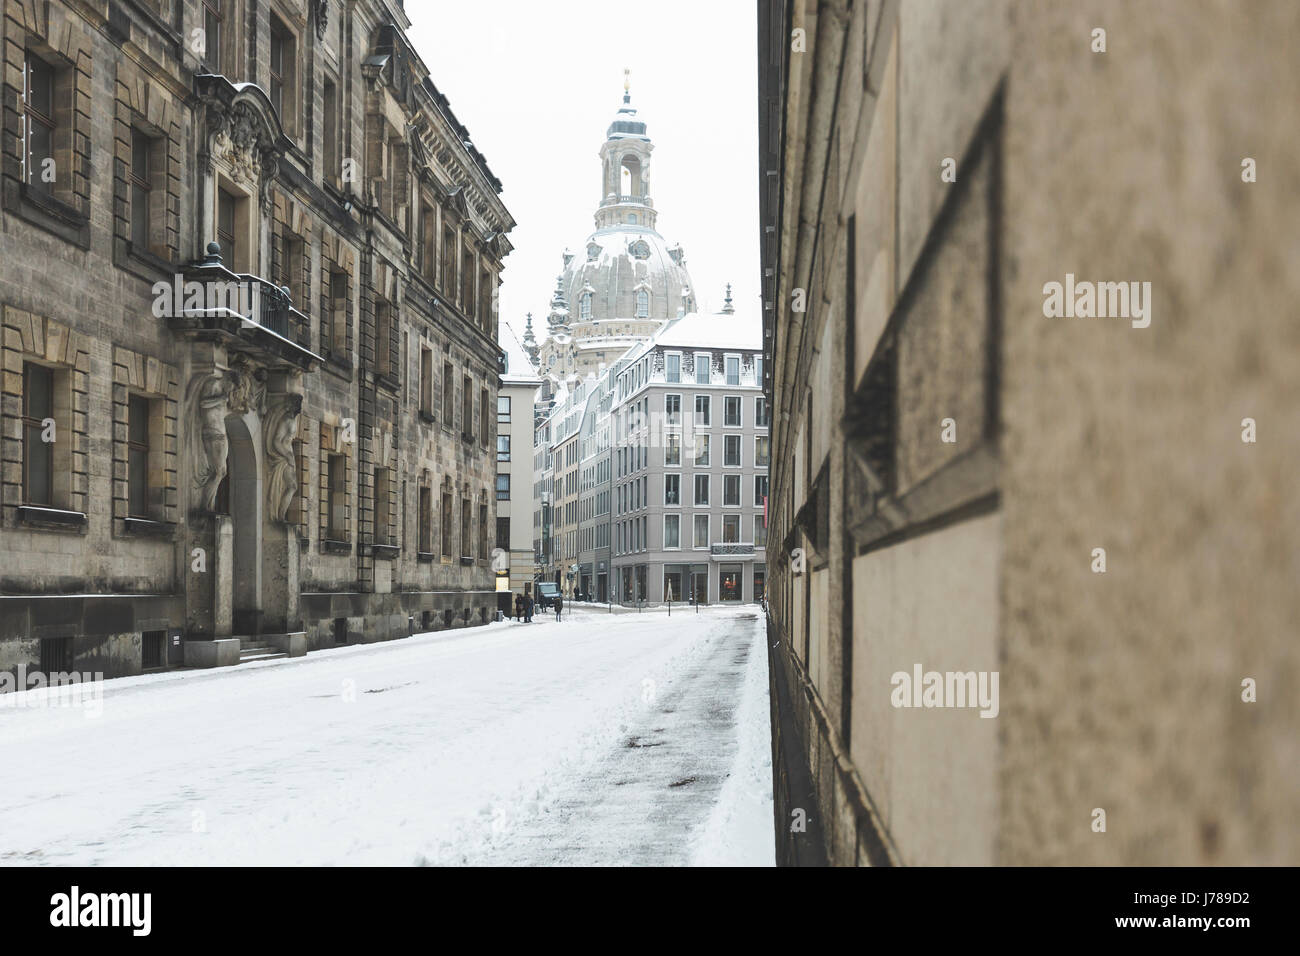 Allemagne, Dresden, Dresde vue d'église Frauenkirche en hiver Banque D'Images